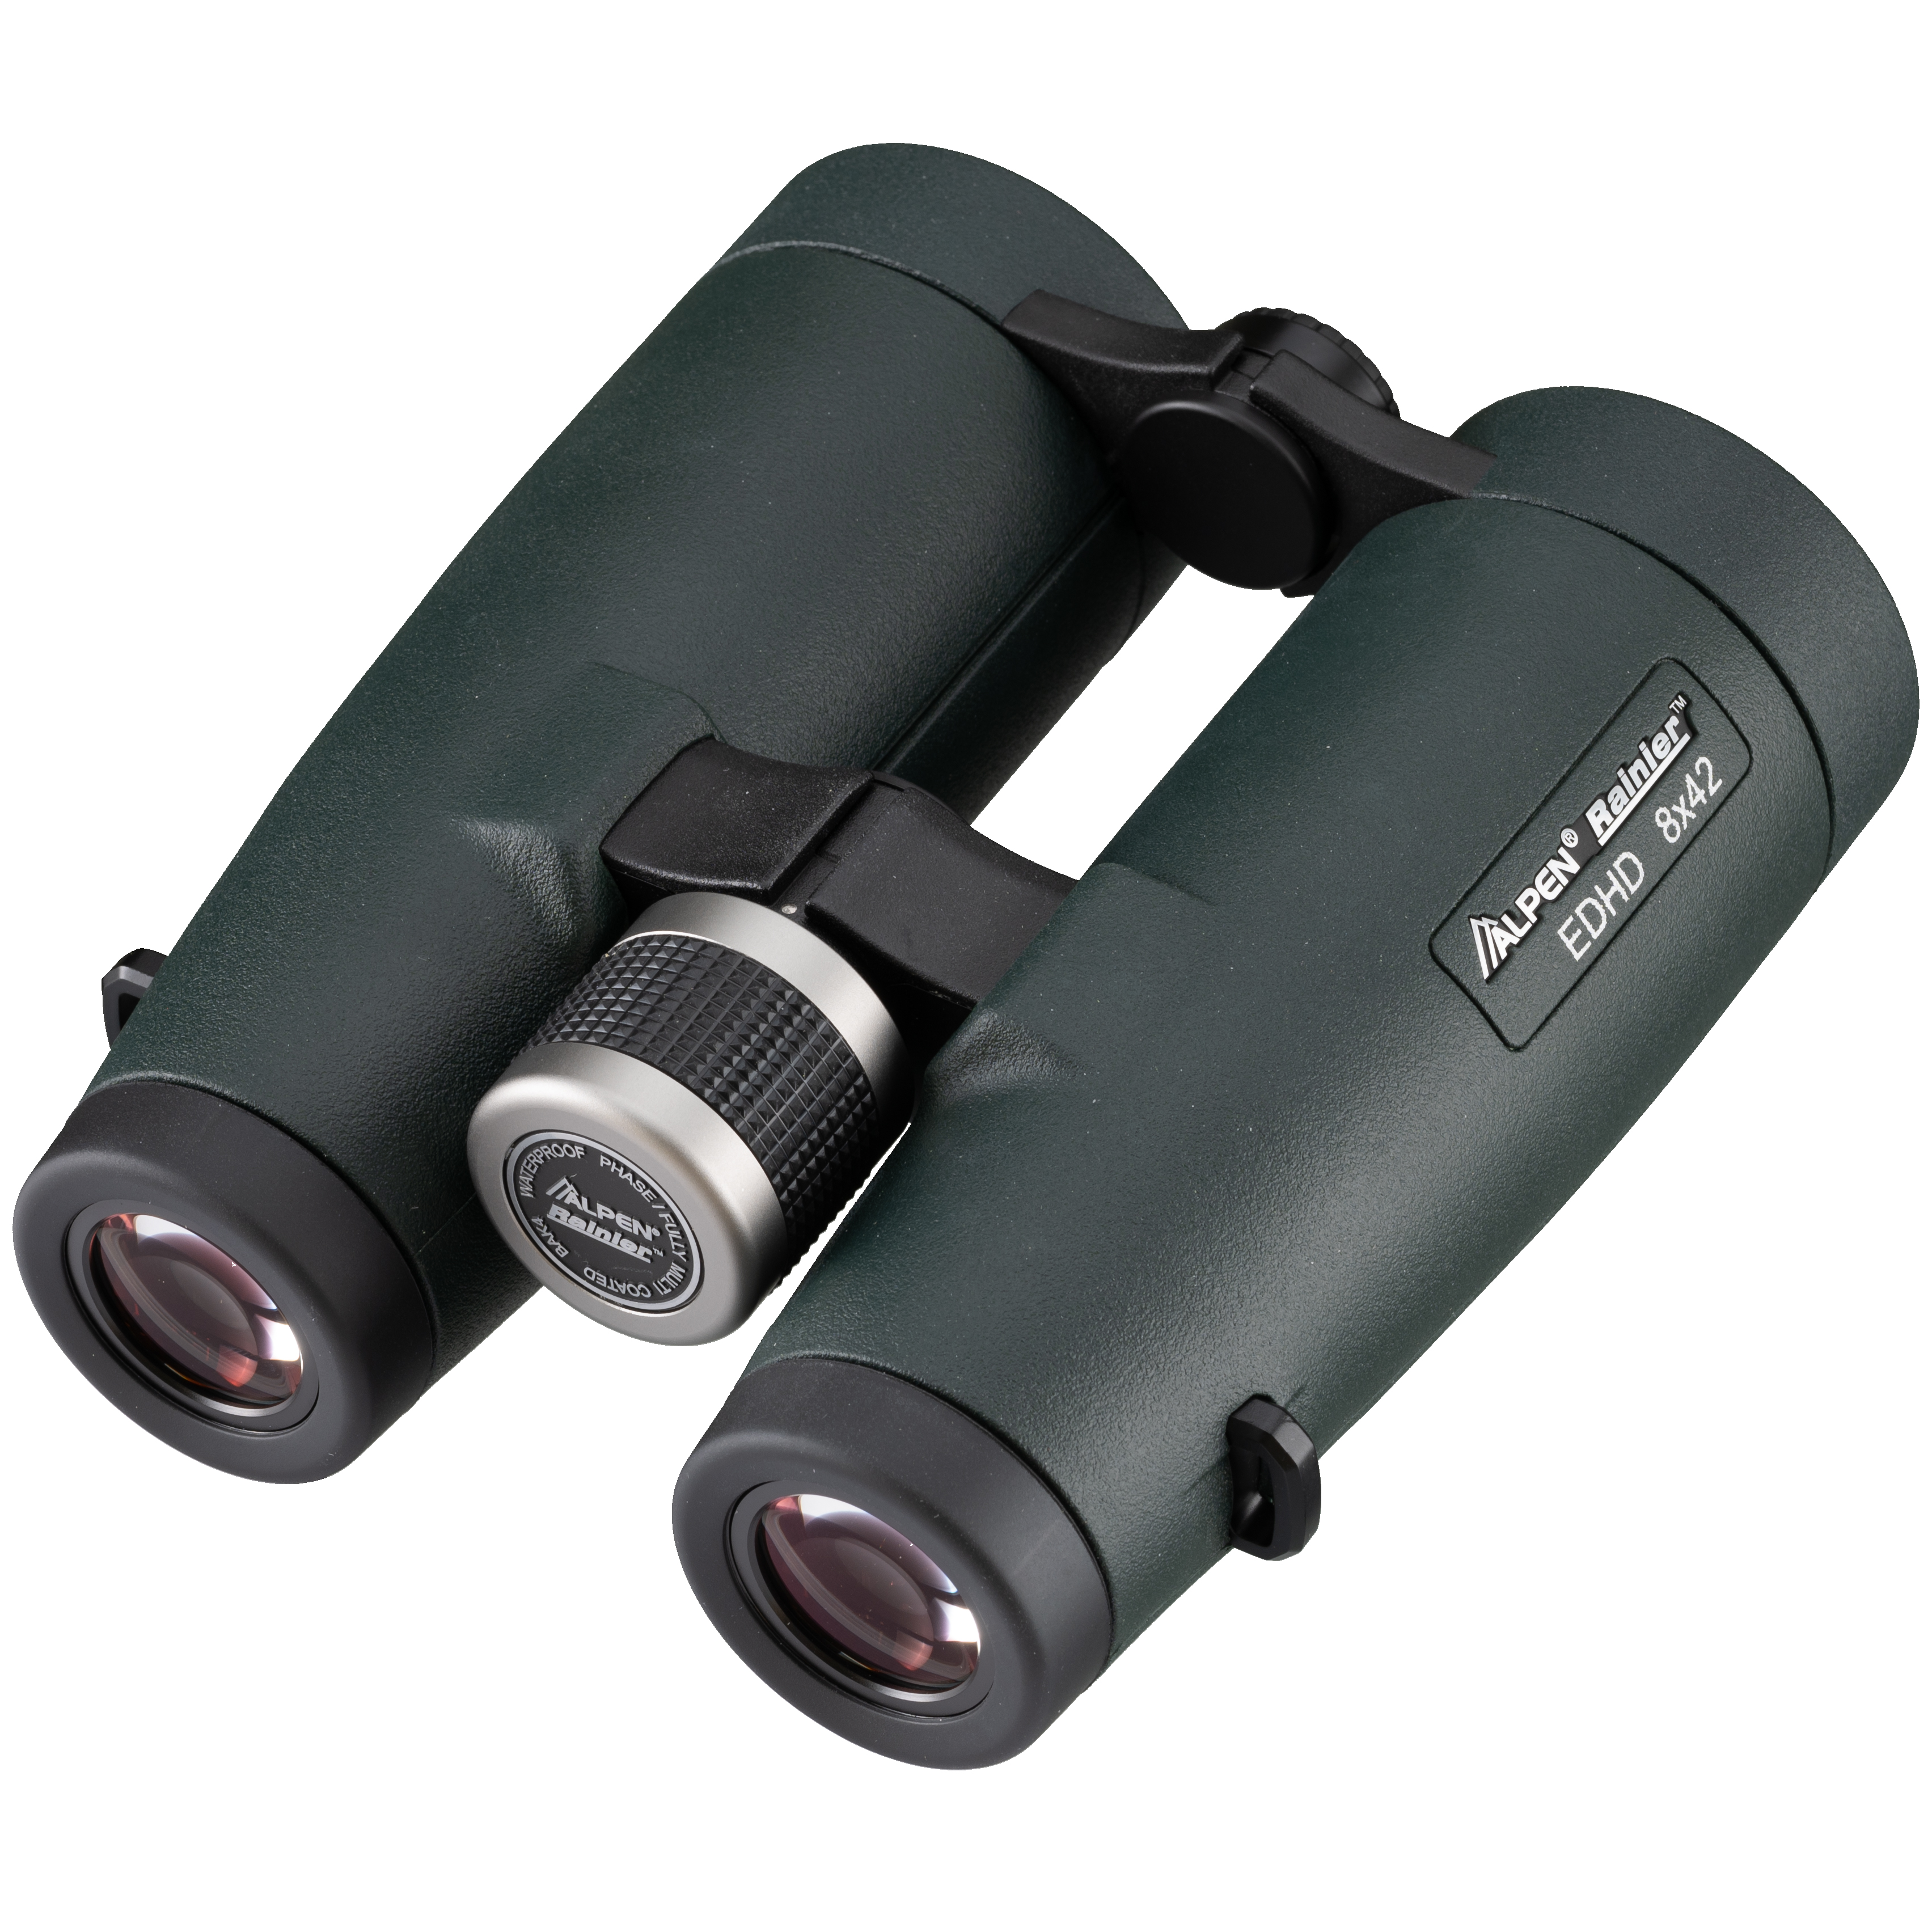 ALPEN OPTICS Rainier 10x42 HD binoculars with ED glass and magnesium housing (Refurbished)